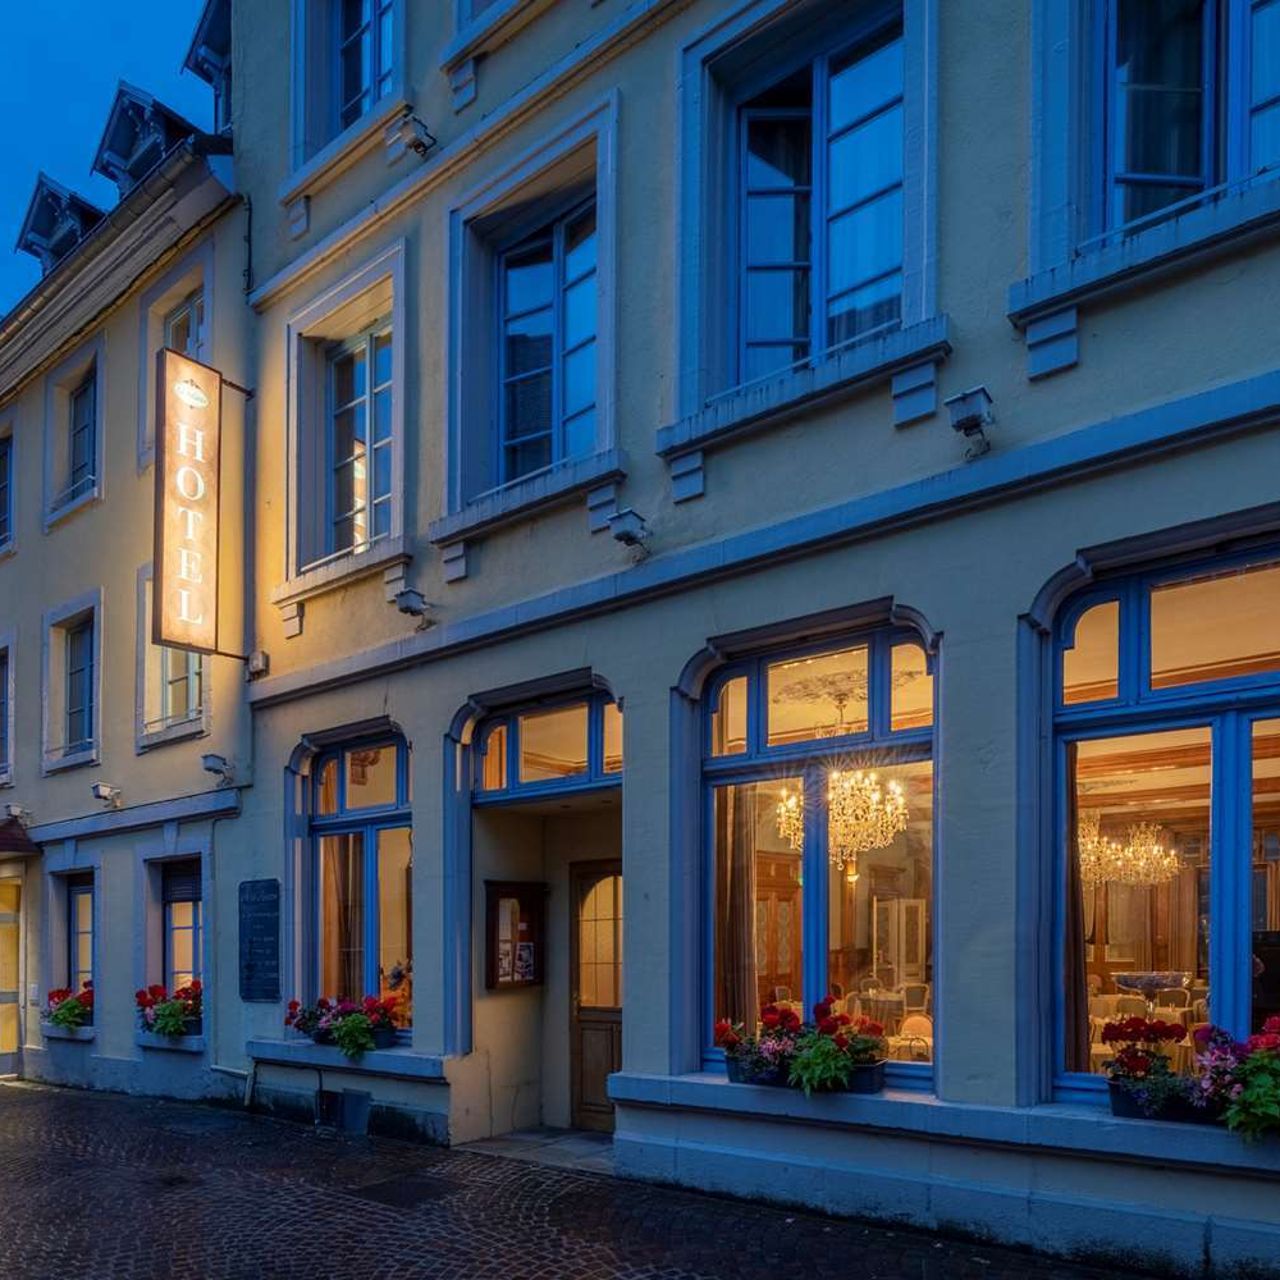 Hôtel La Balance Montbéliard - Great prices at HOTEL INFO